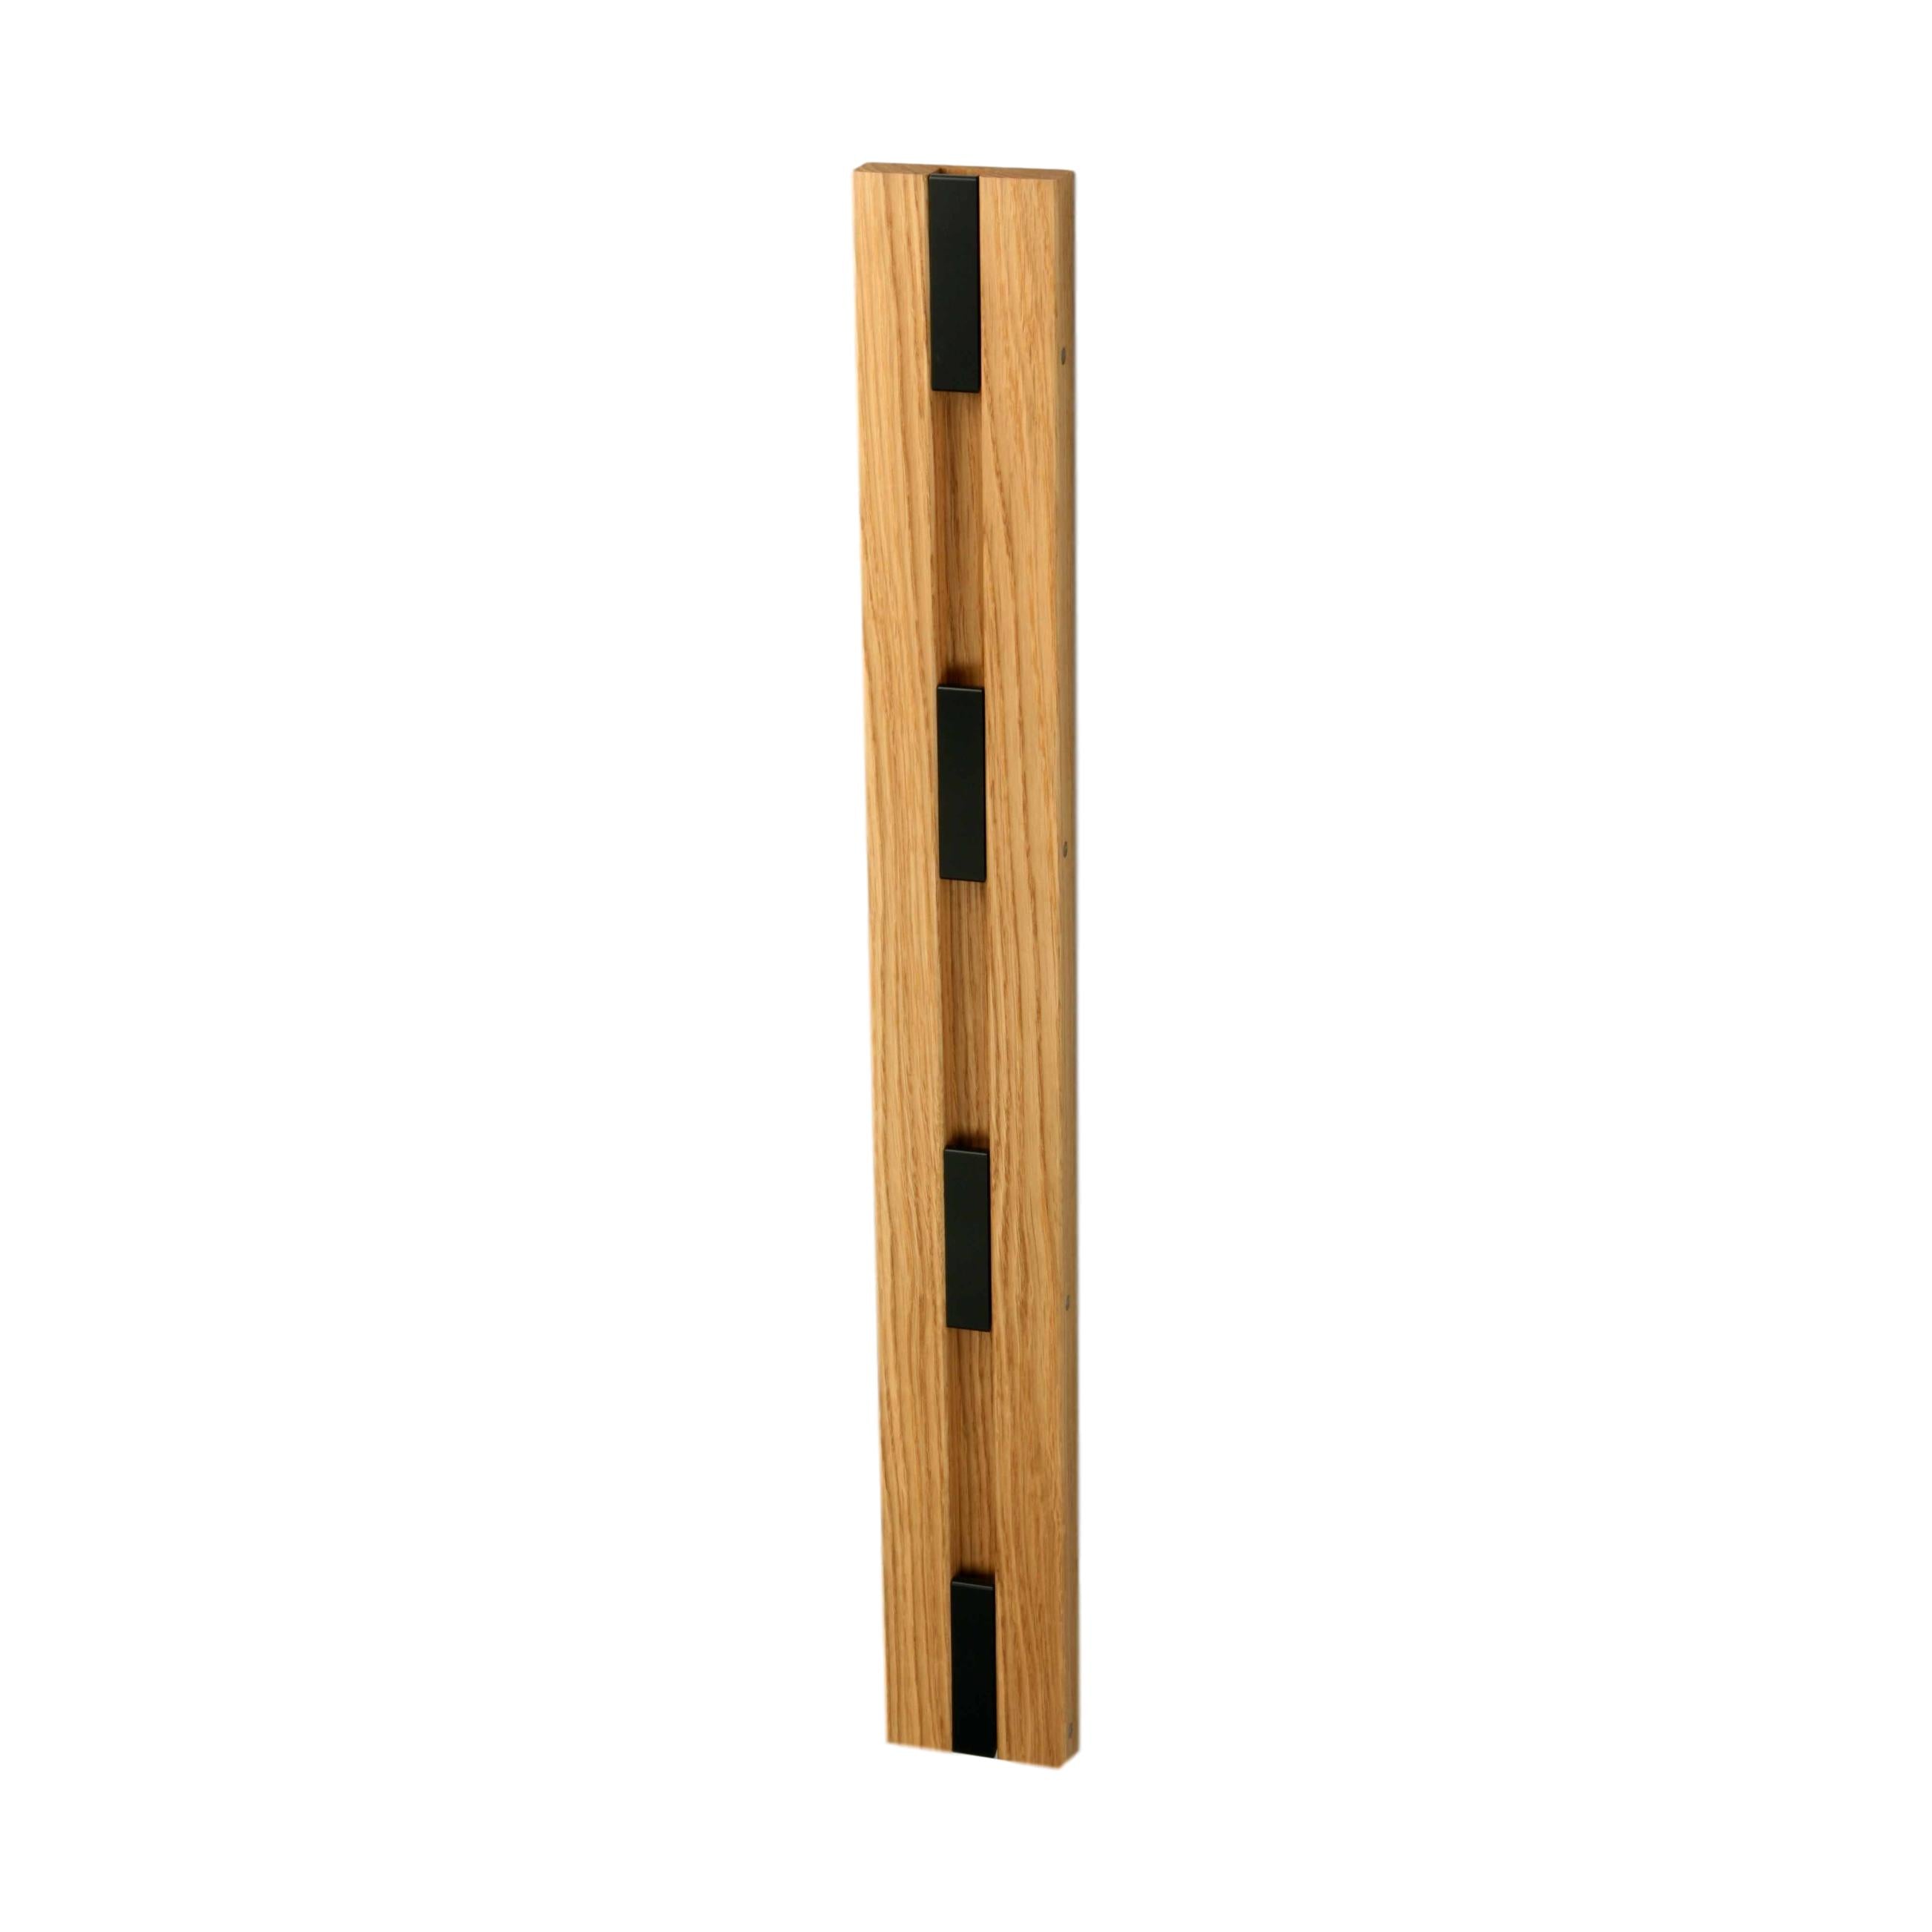 Loca knax Vertical Coat Rack, dubový naolejovaný/černý